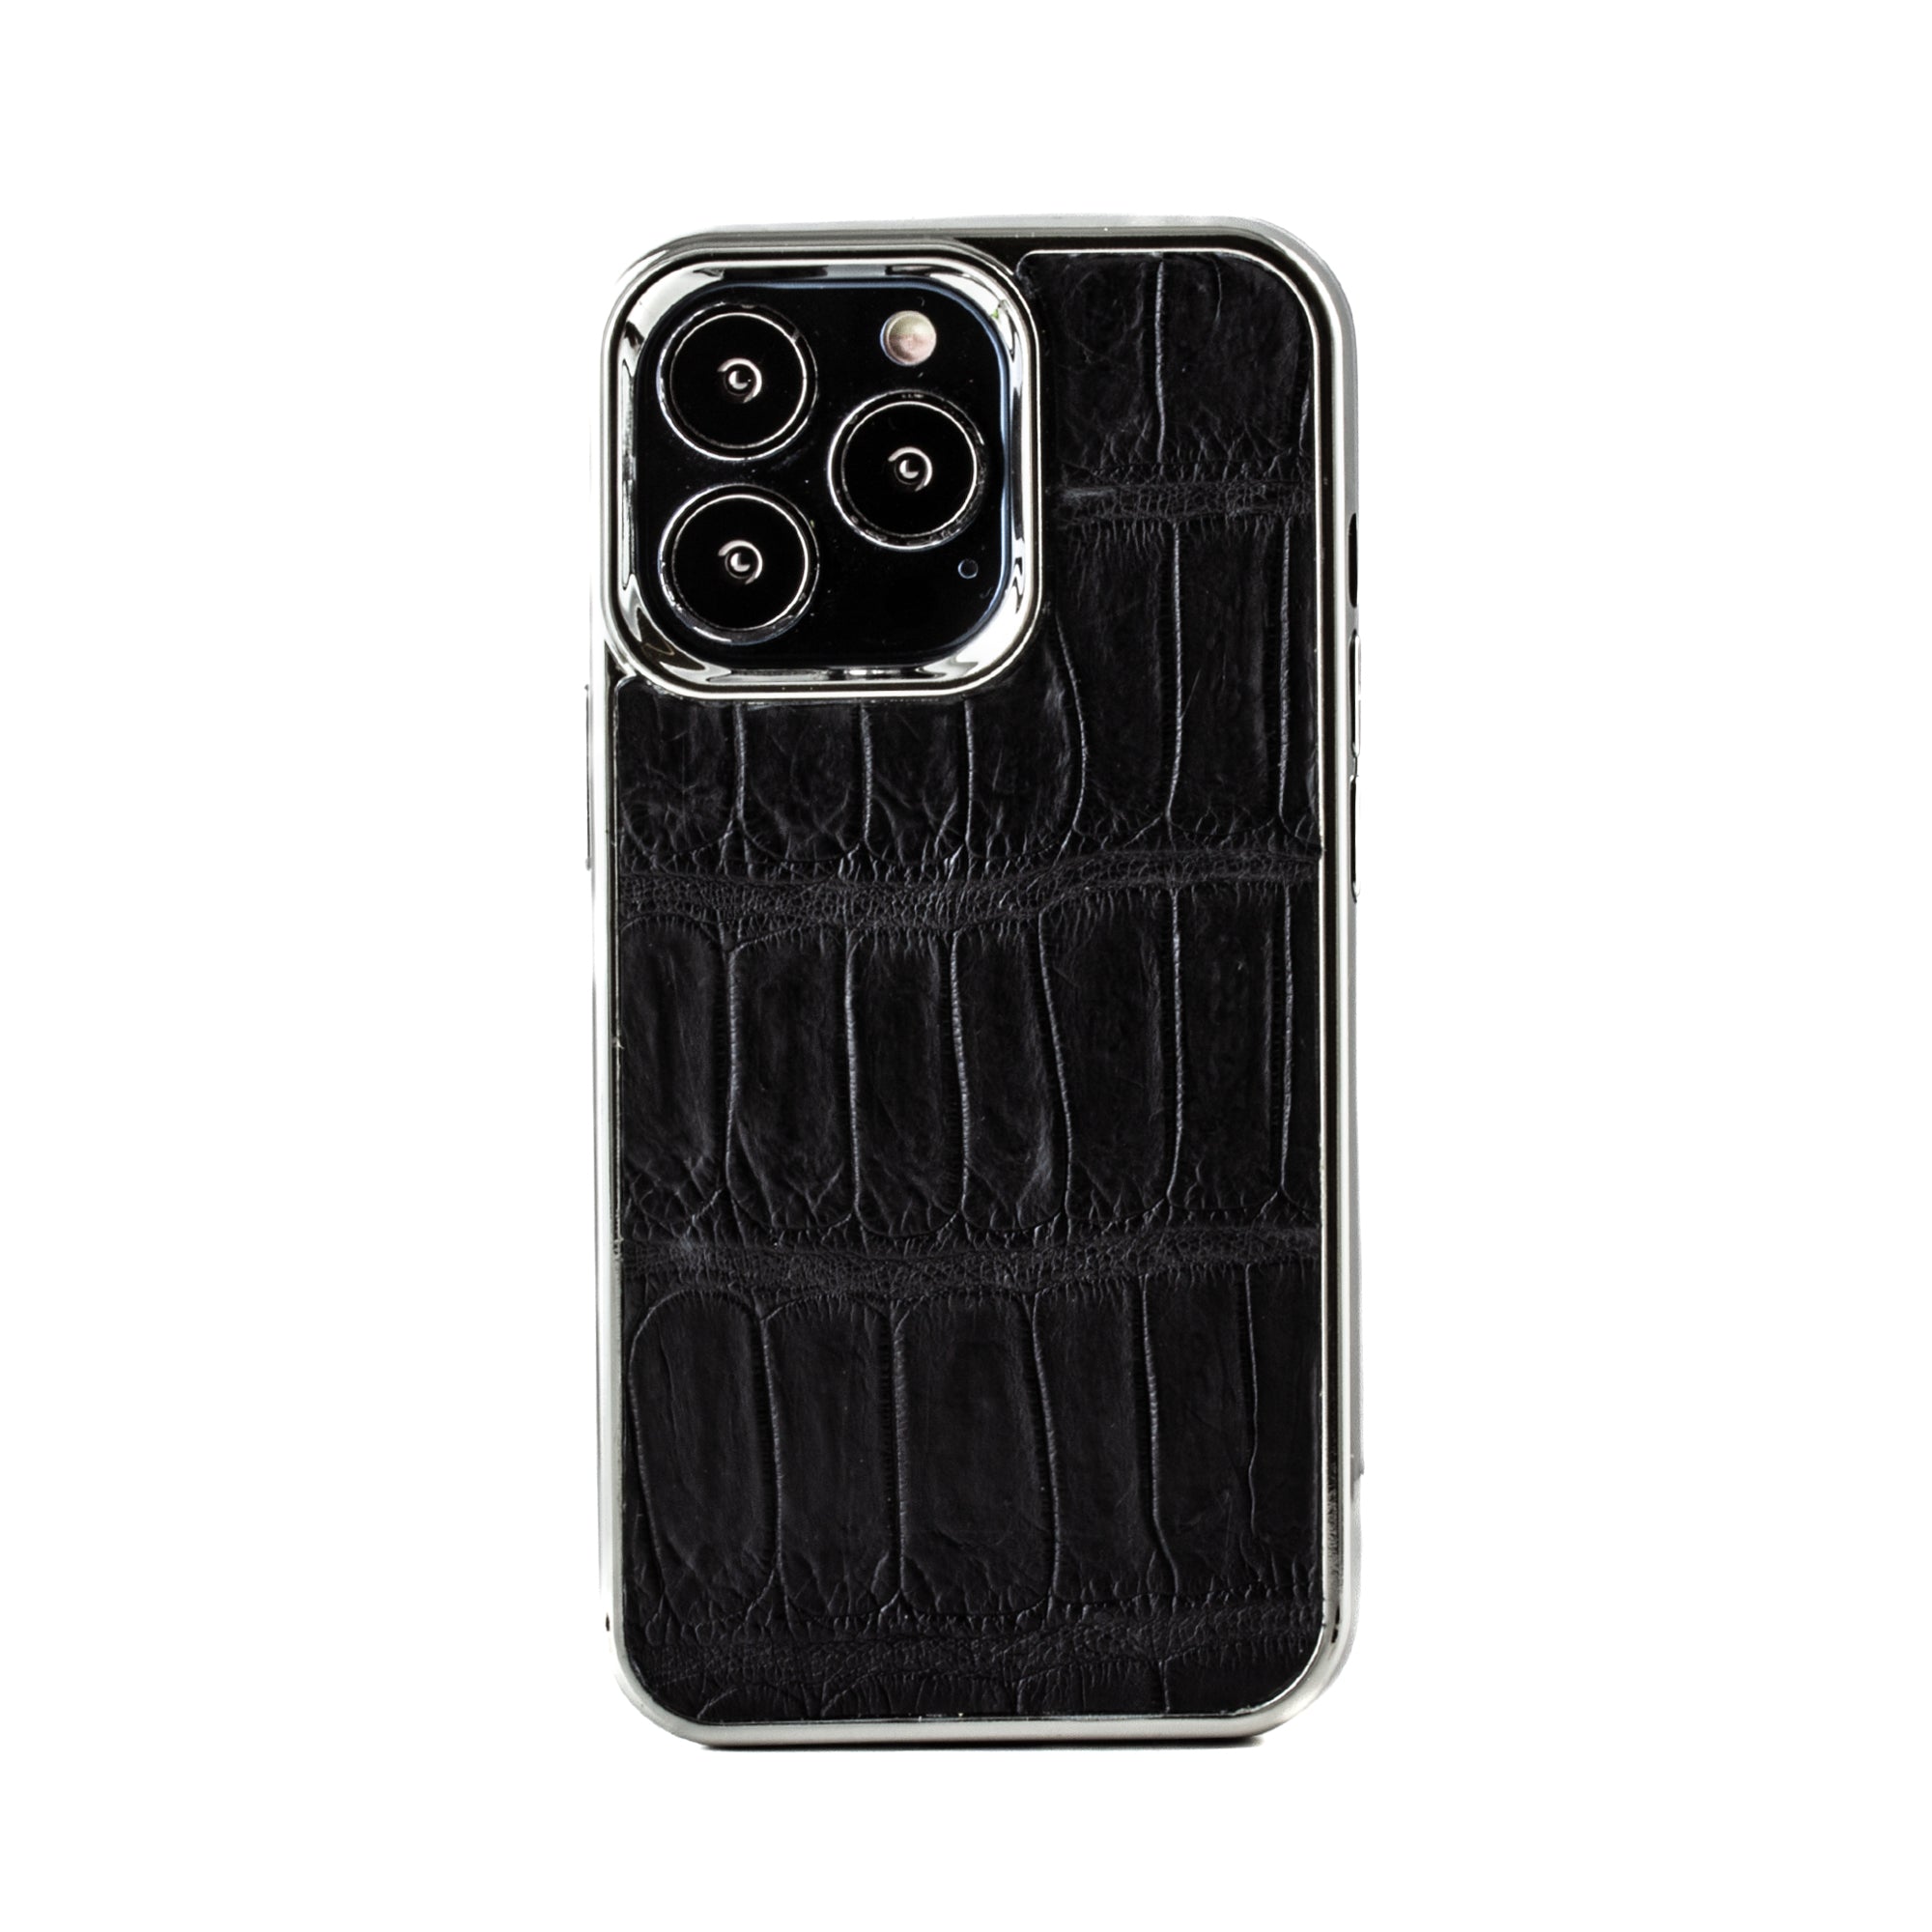 Clearance Sale - Leather iPhone "Sport Case" - iPhone 13 Pro - Black alligator